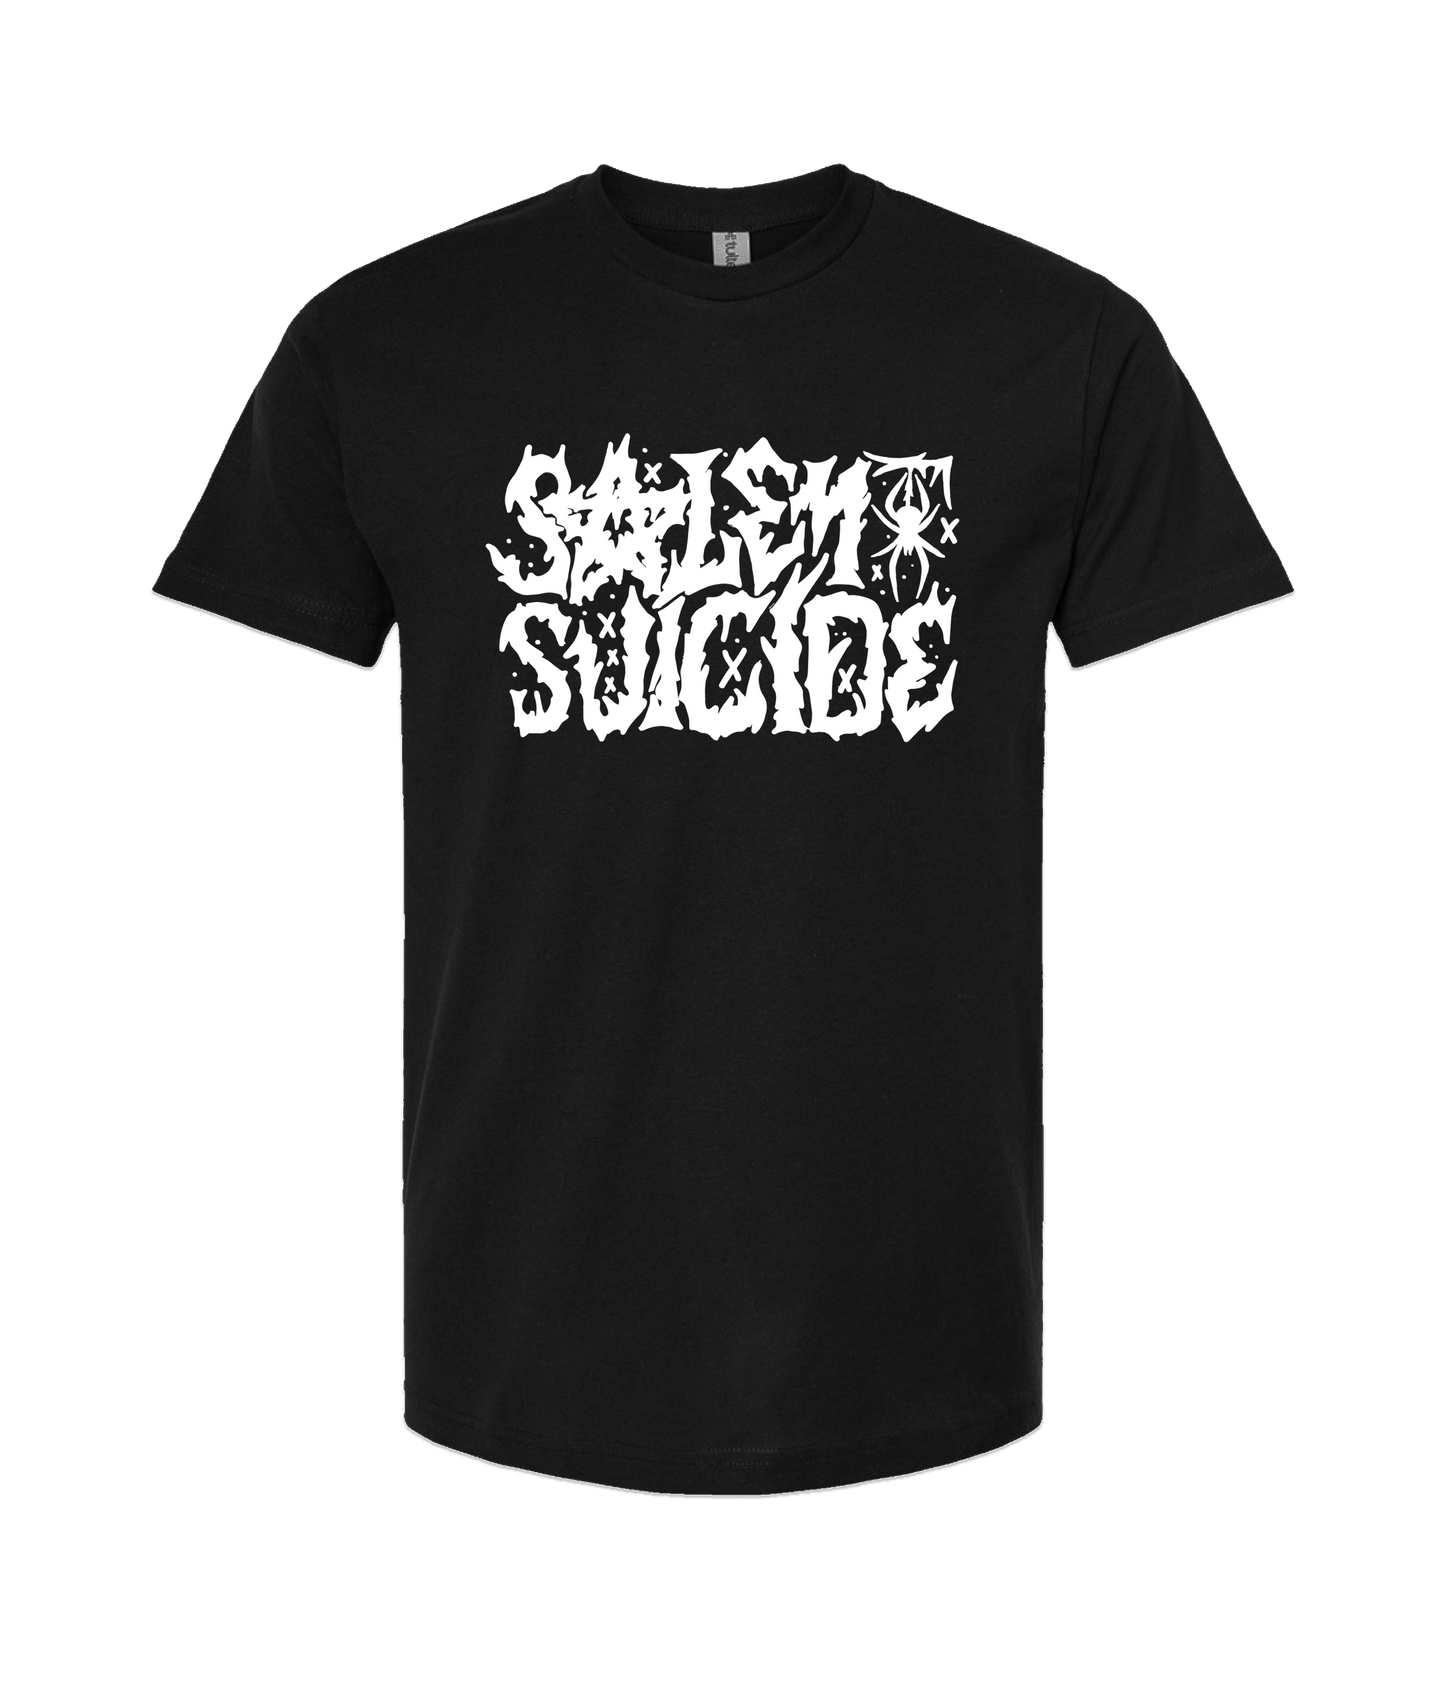 Salem Suicide - Logo White - Black T Shirt